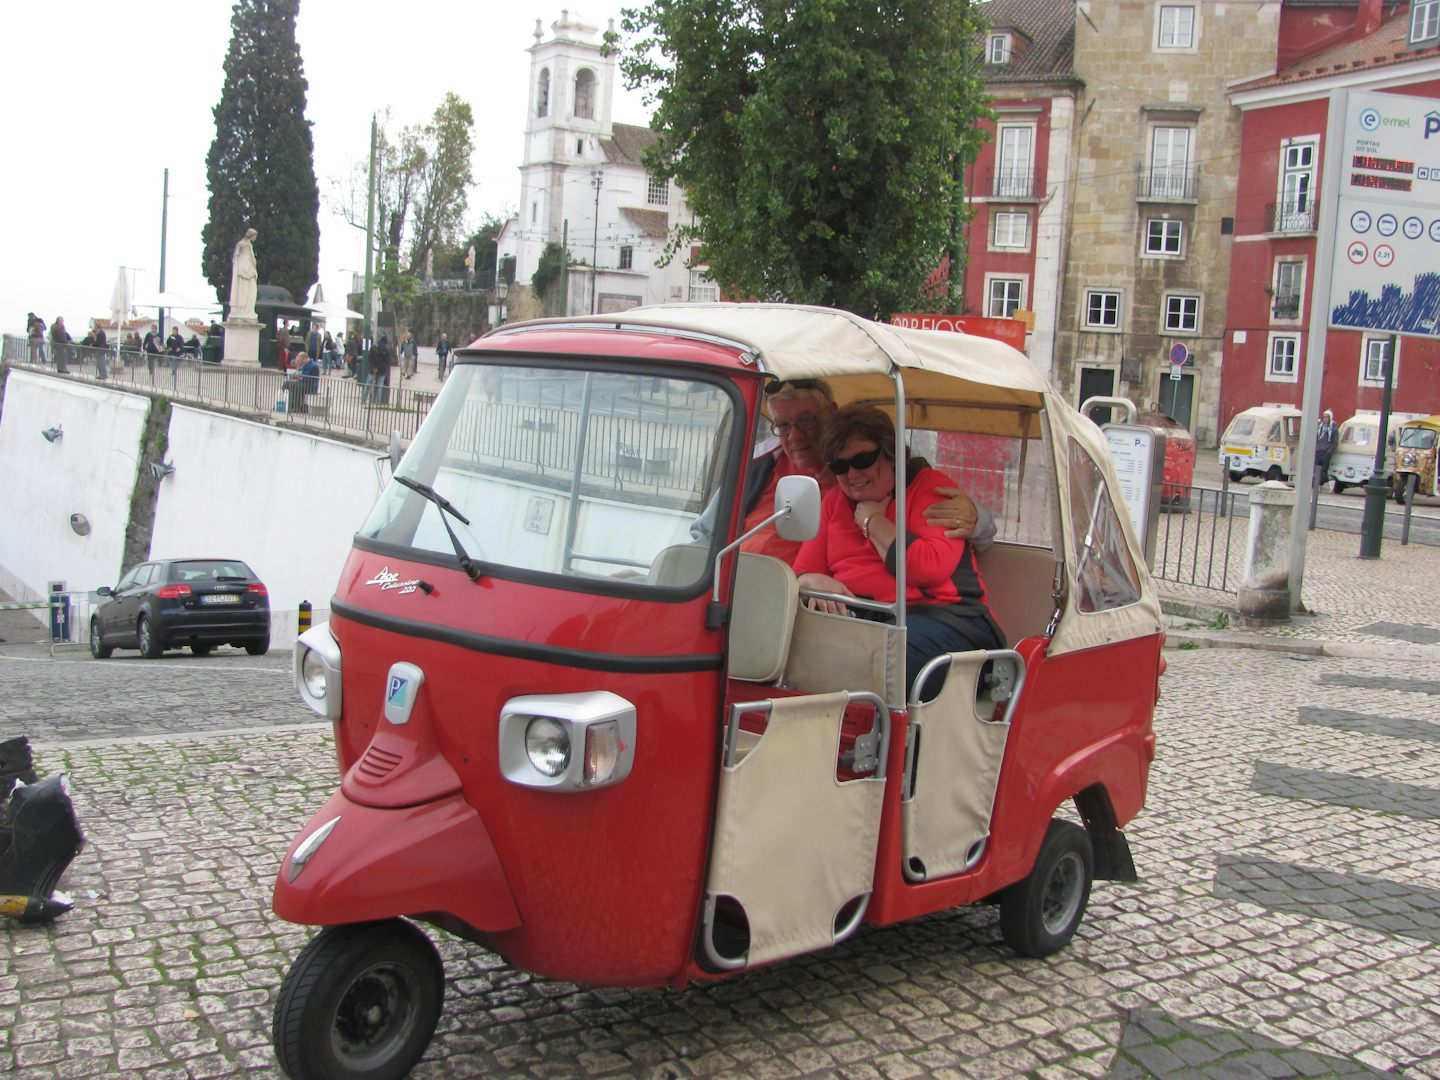 Our Tuk Tuk tour in Lisbon